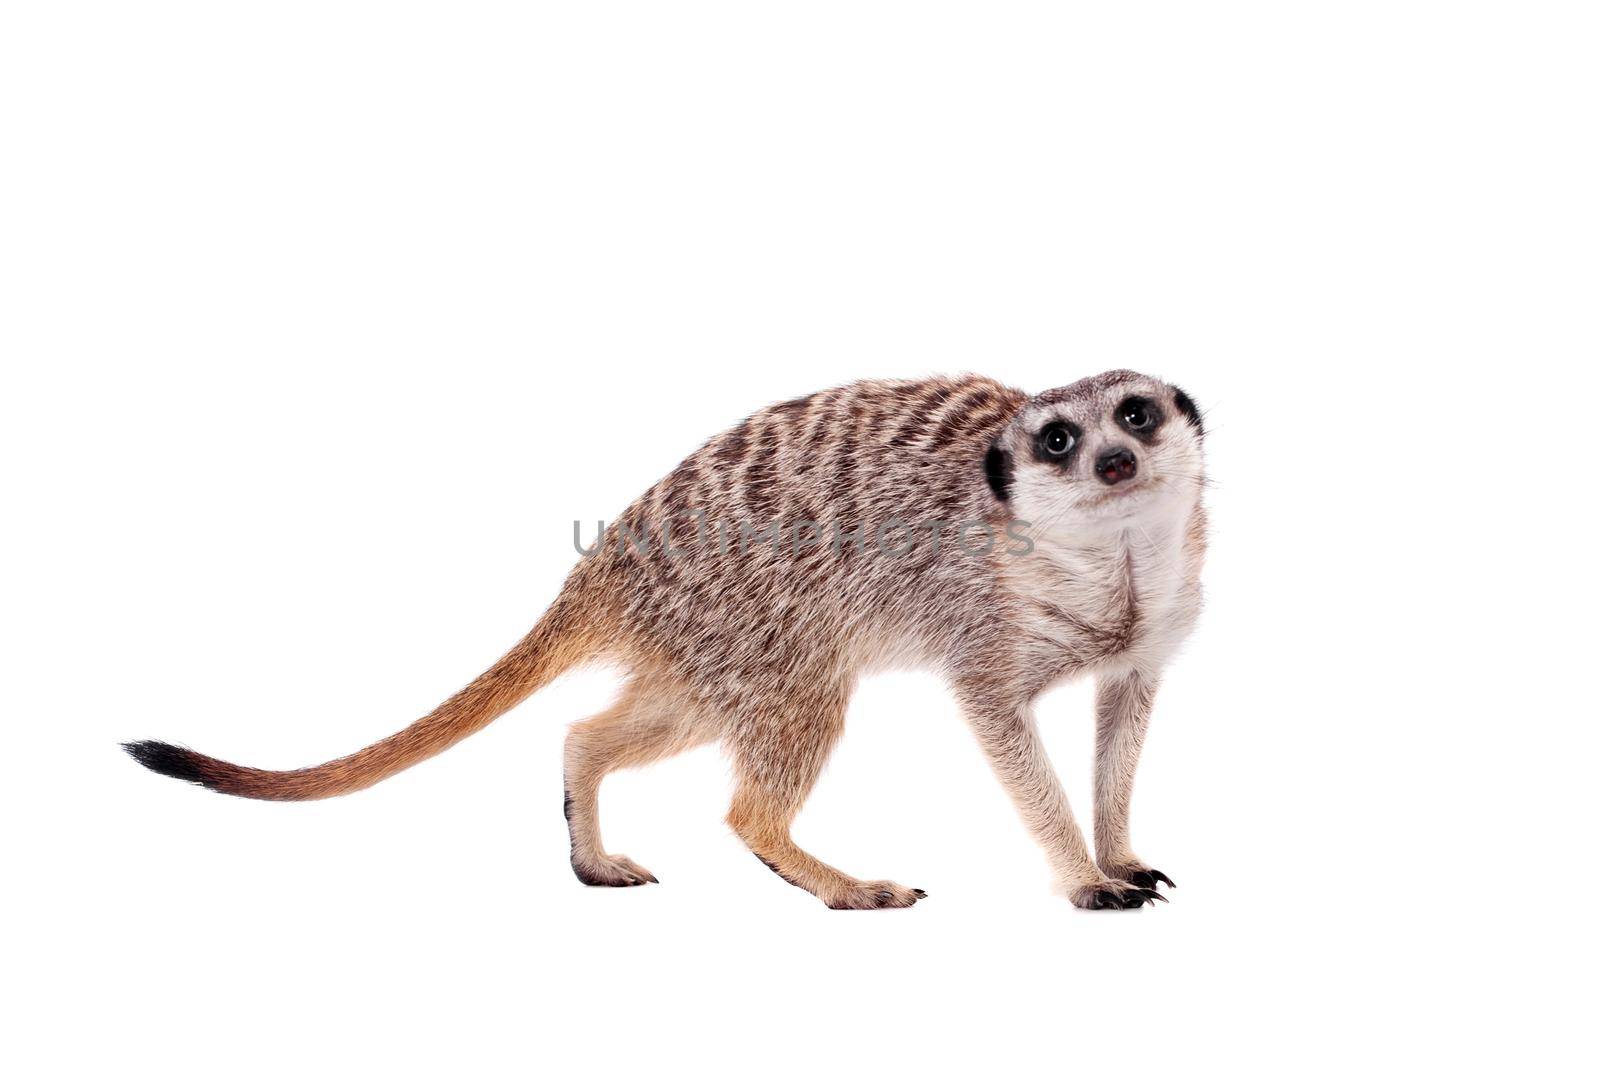 The meerkat or suricate on white by RosaJay